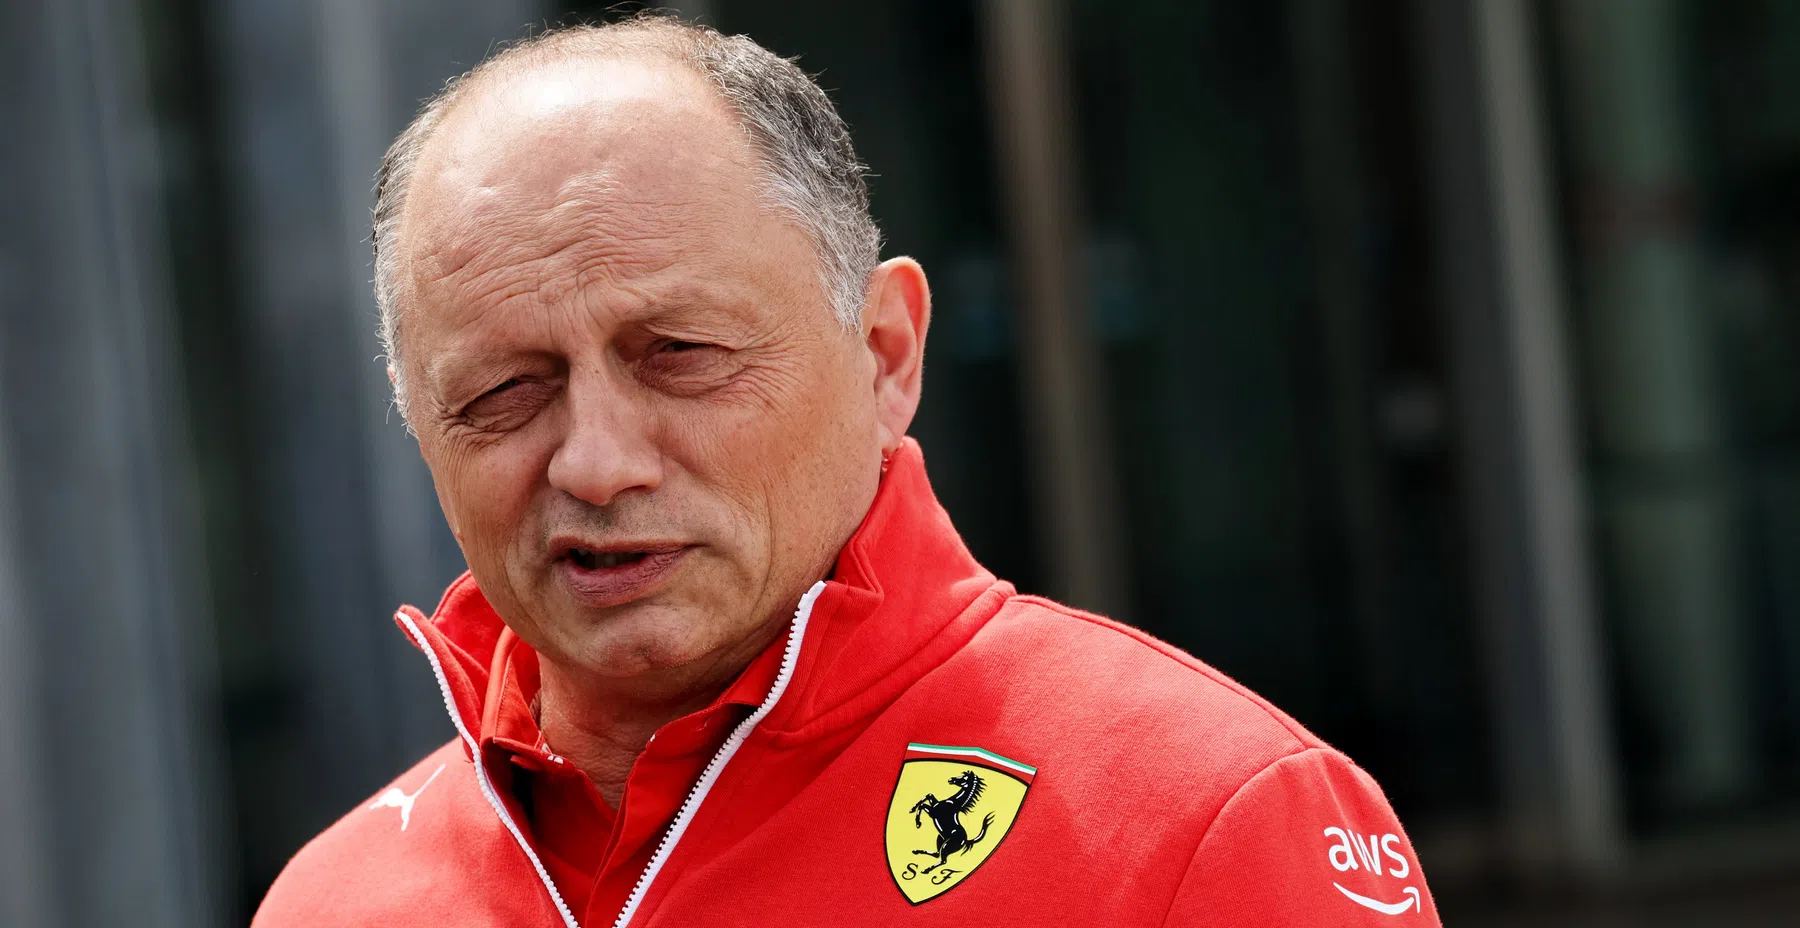 Vasseur, jefe de equipo de Ferrari, habla del impacto de Newey